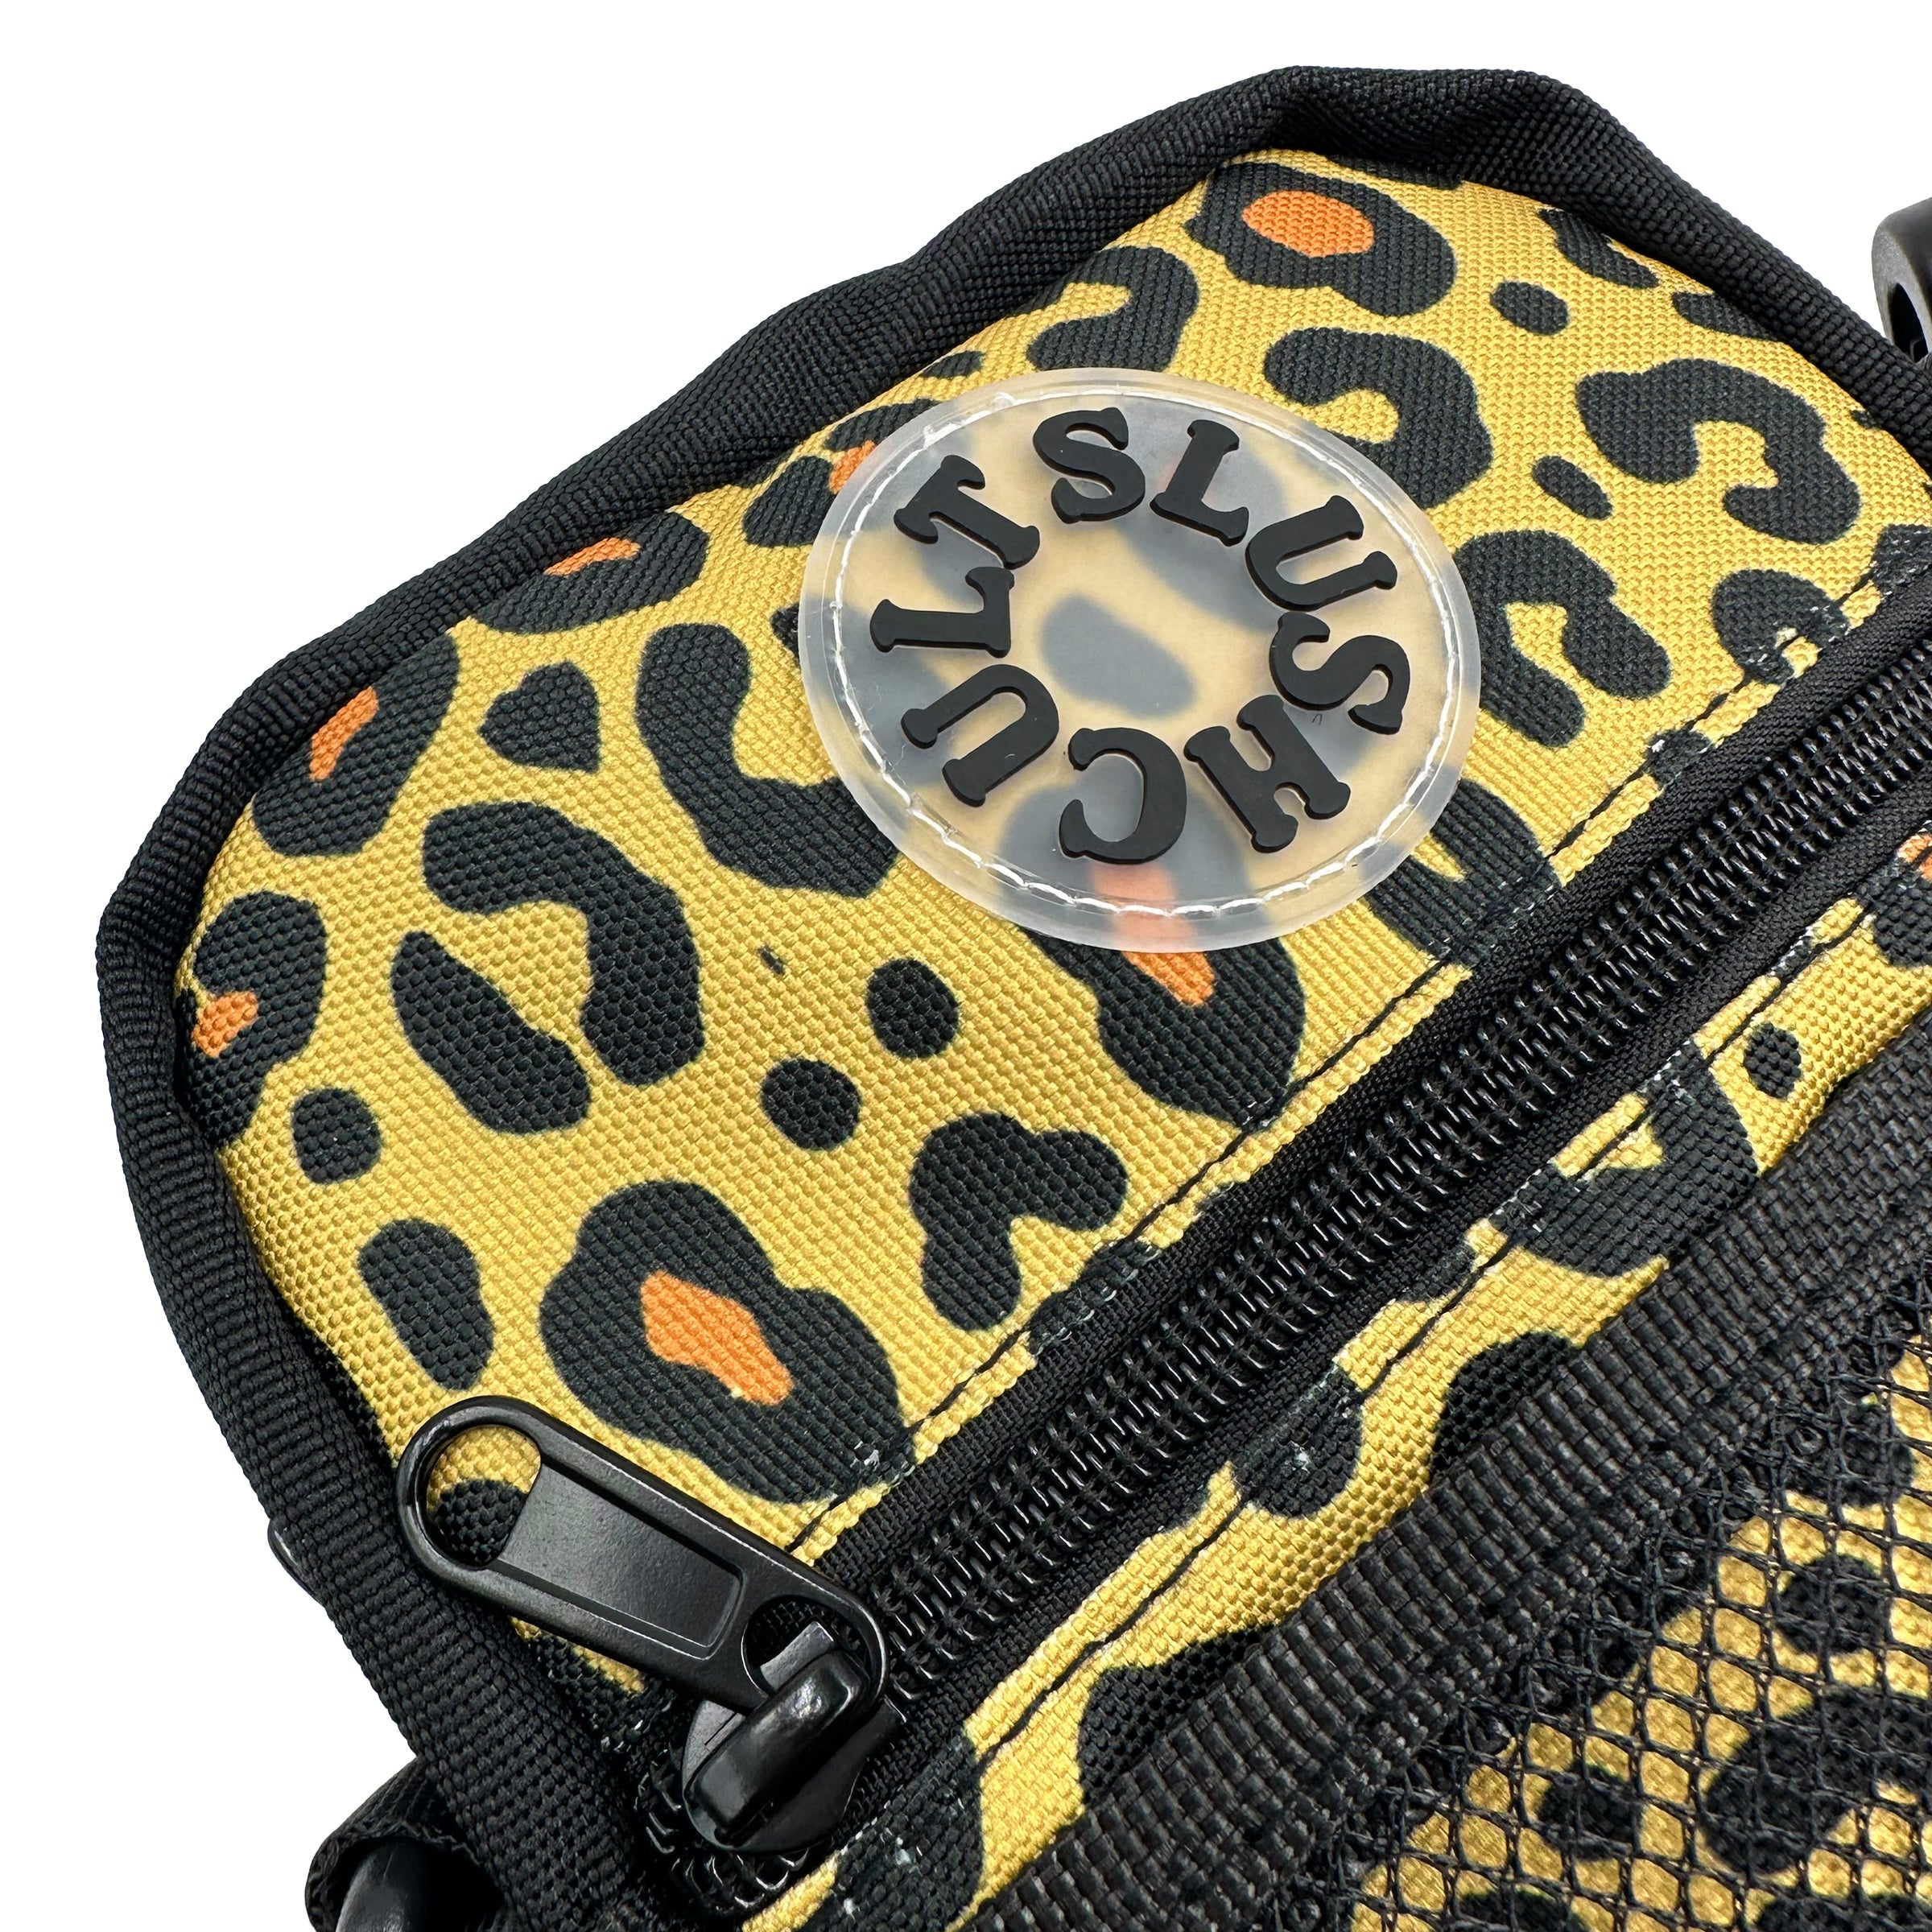 Anywhere Side Bag "Leopard" Print Accessories Slushcult    Slushcult